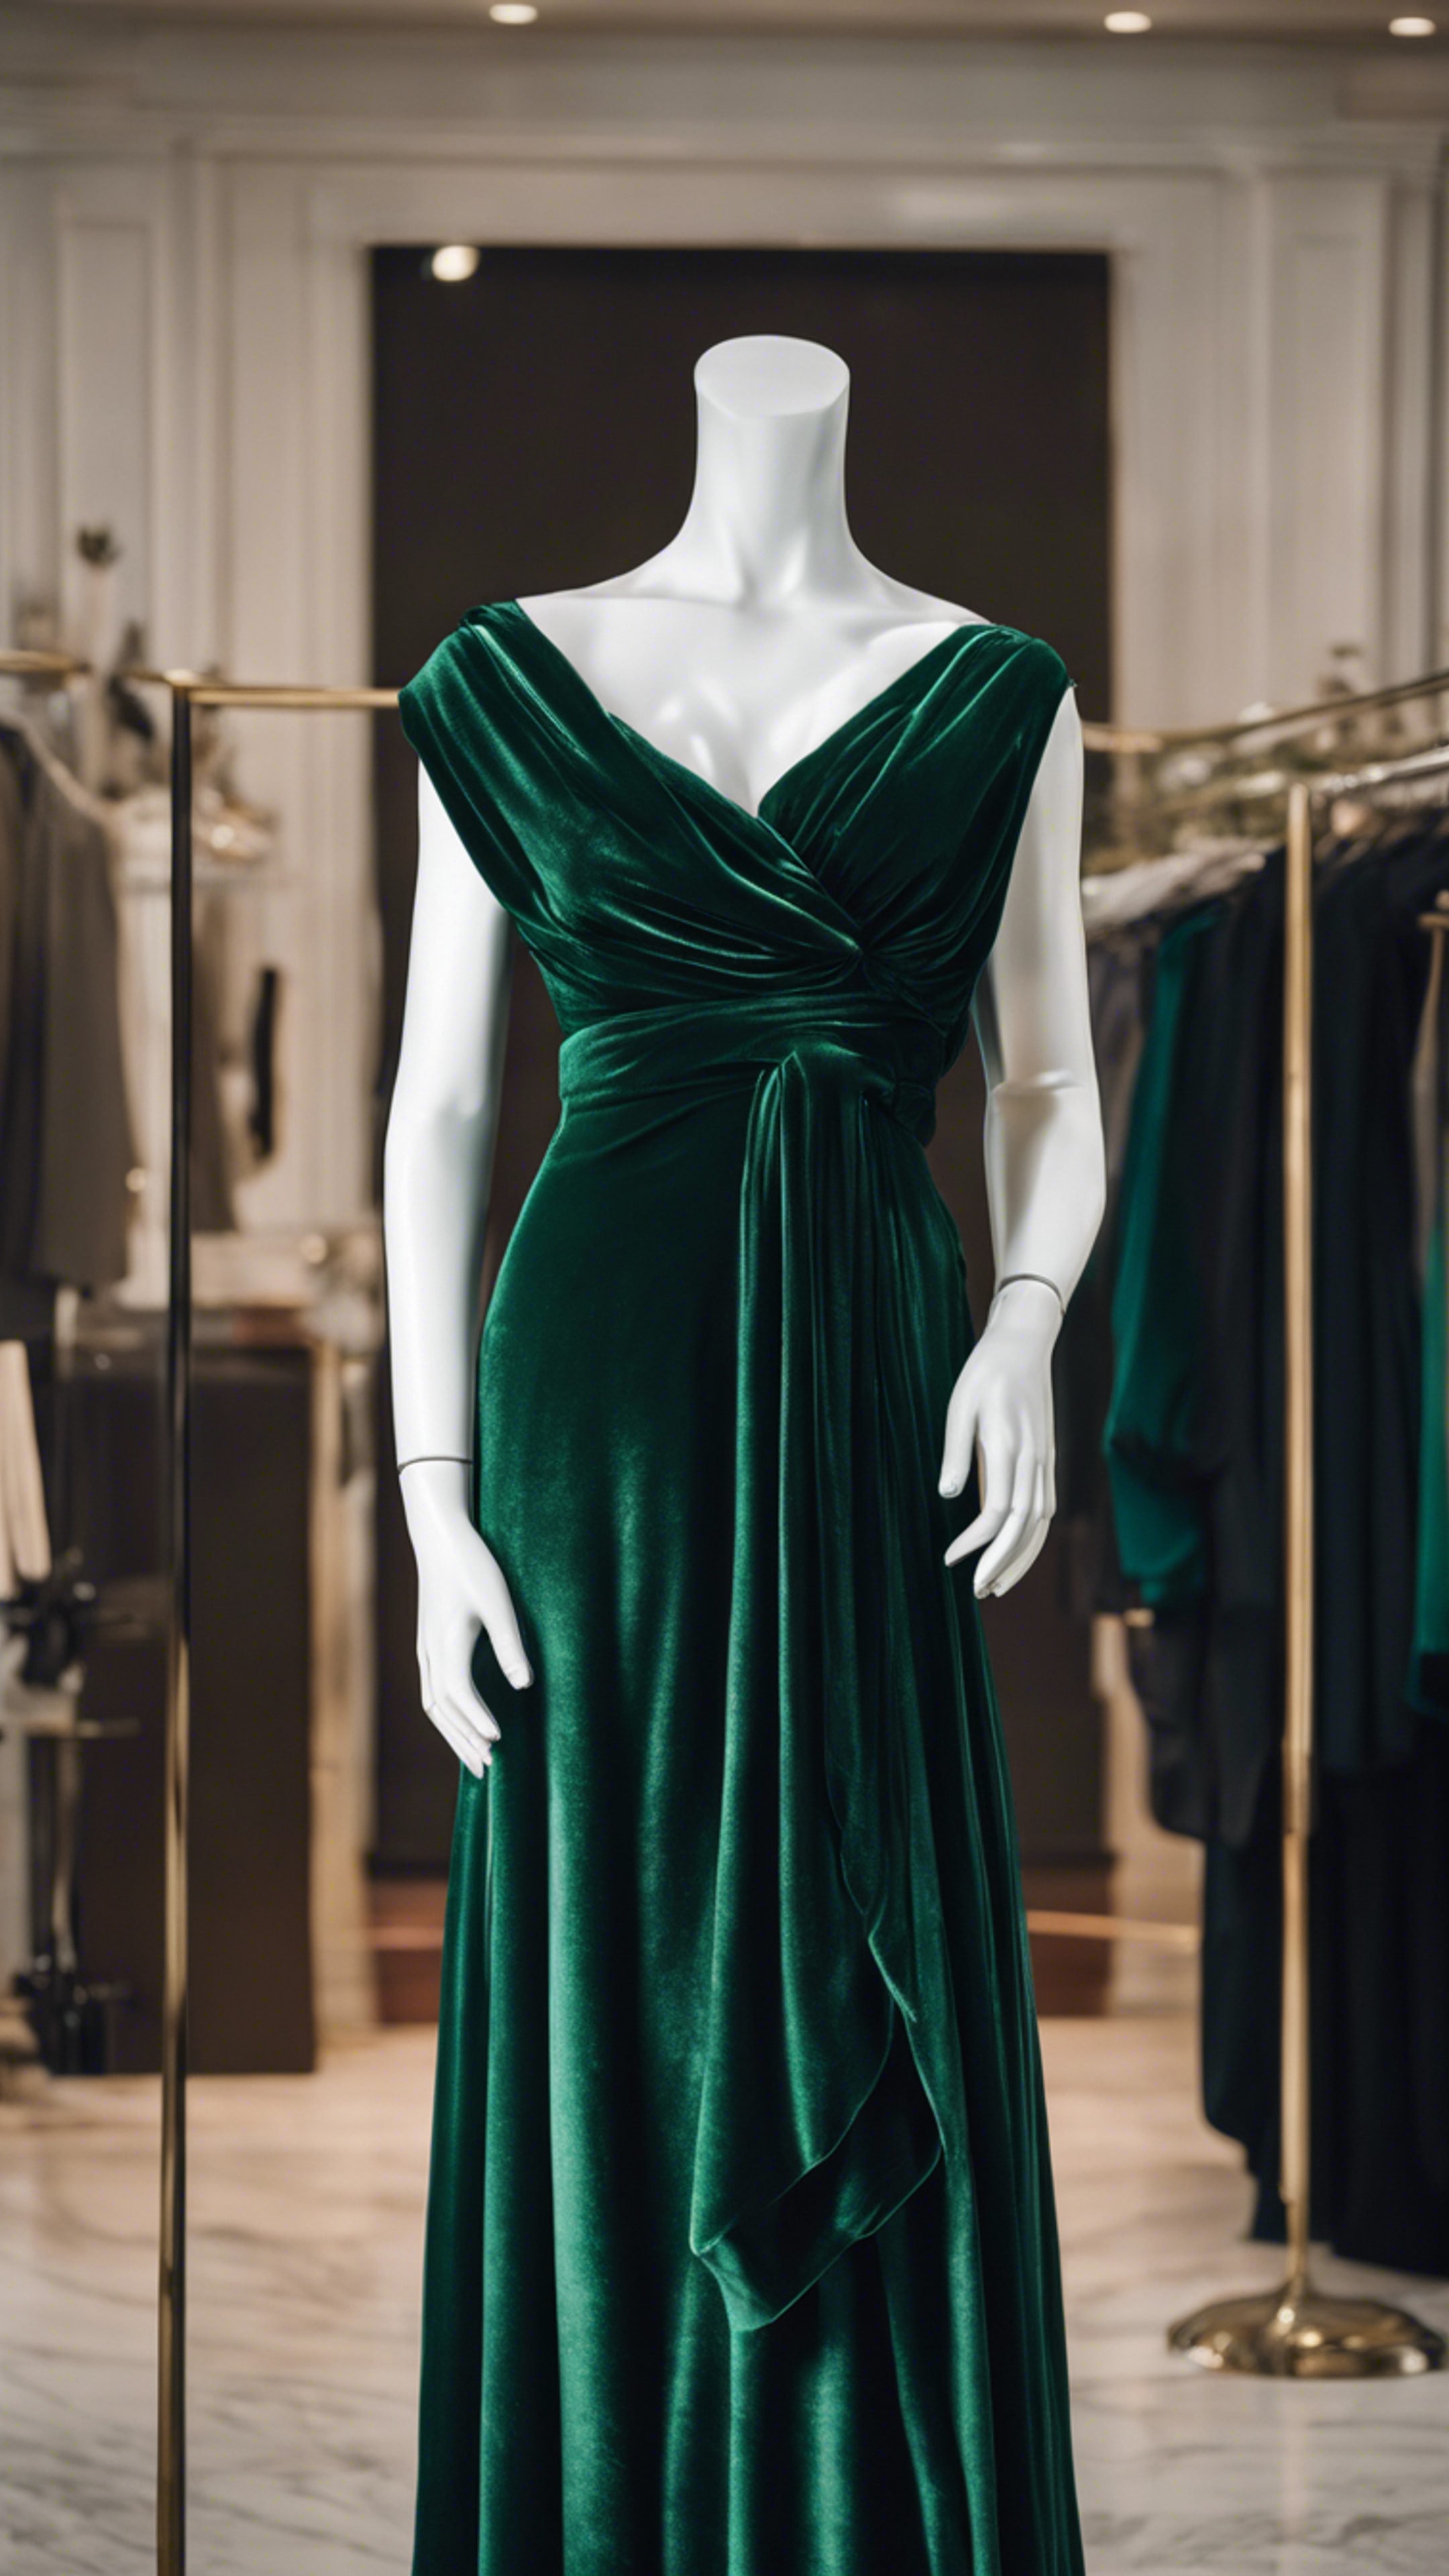 A classy dark green velvet dress draped on a mannequin. Валлпапер[4958bfaa75d040bb9909]